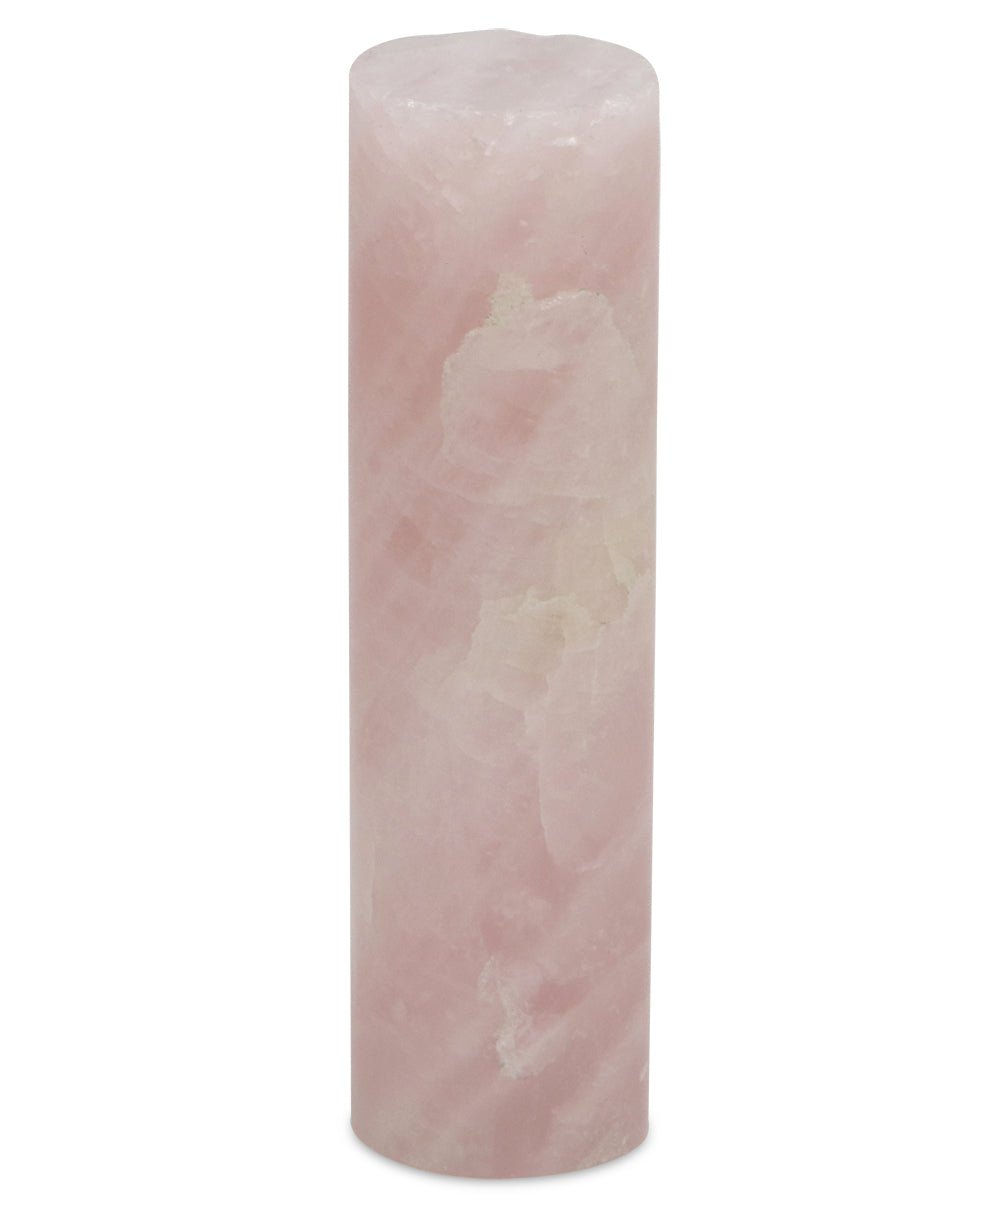 Gemstone Massage Rollers - Massage Stones Rose Quartz